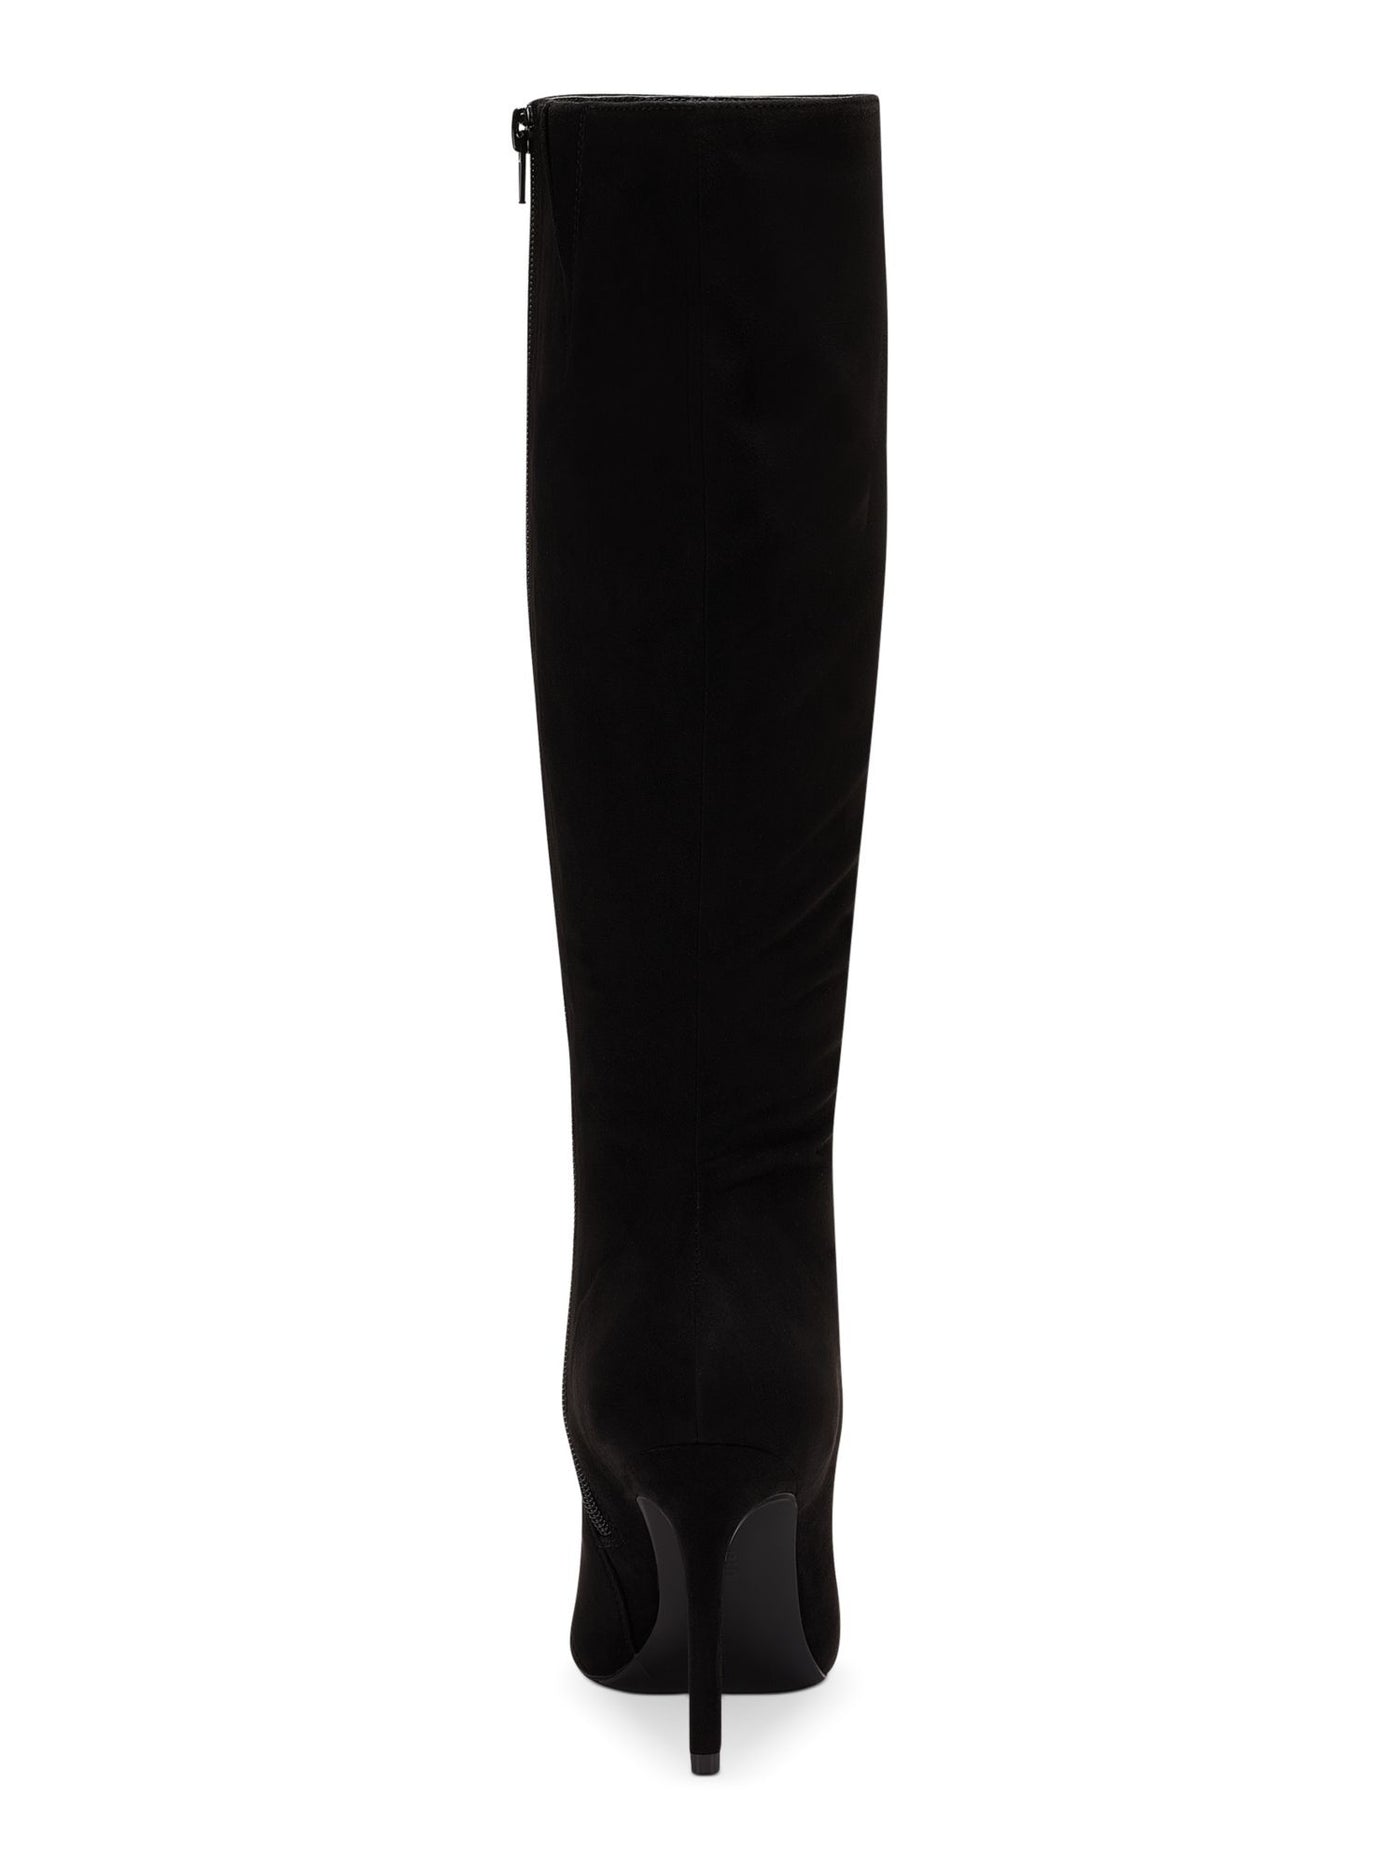 INC Womens Black Cushioned Rajel Pointy Toe Stiletto Zip-Up Dress Boots 10.5 M